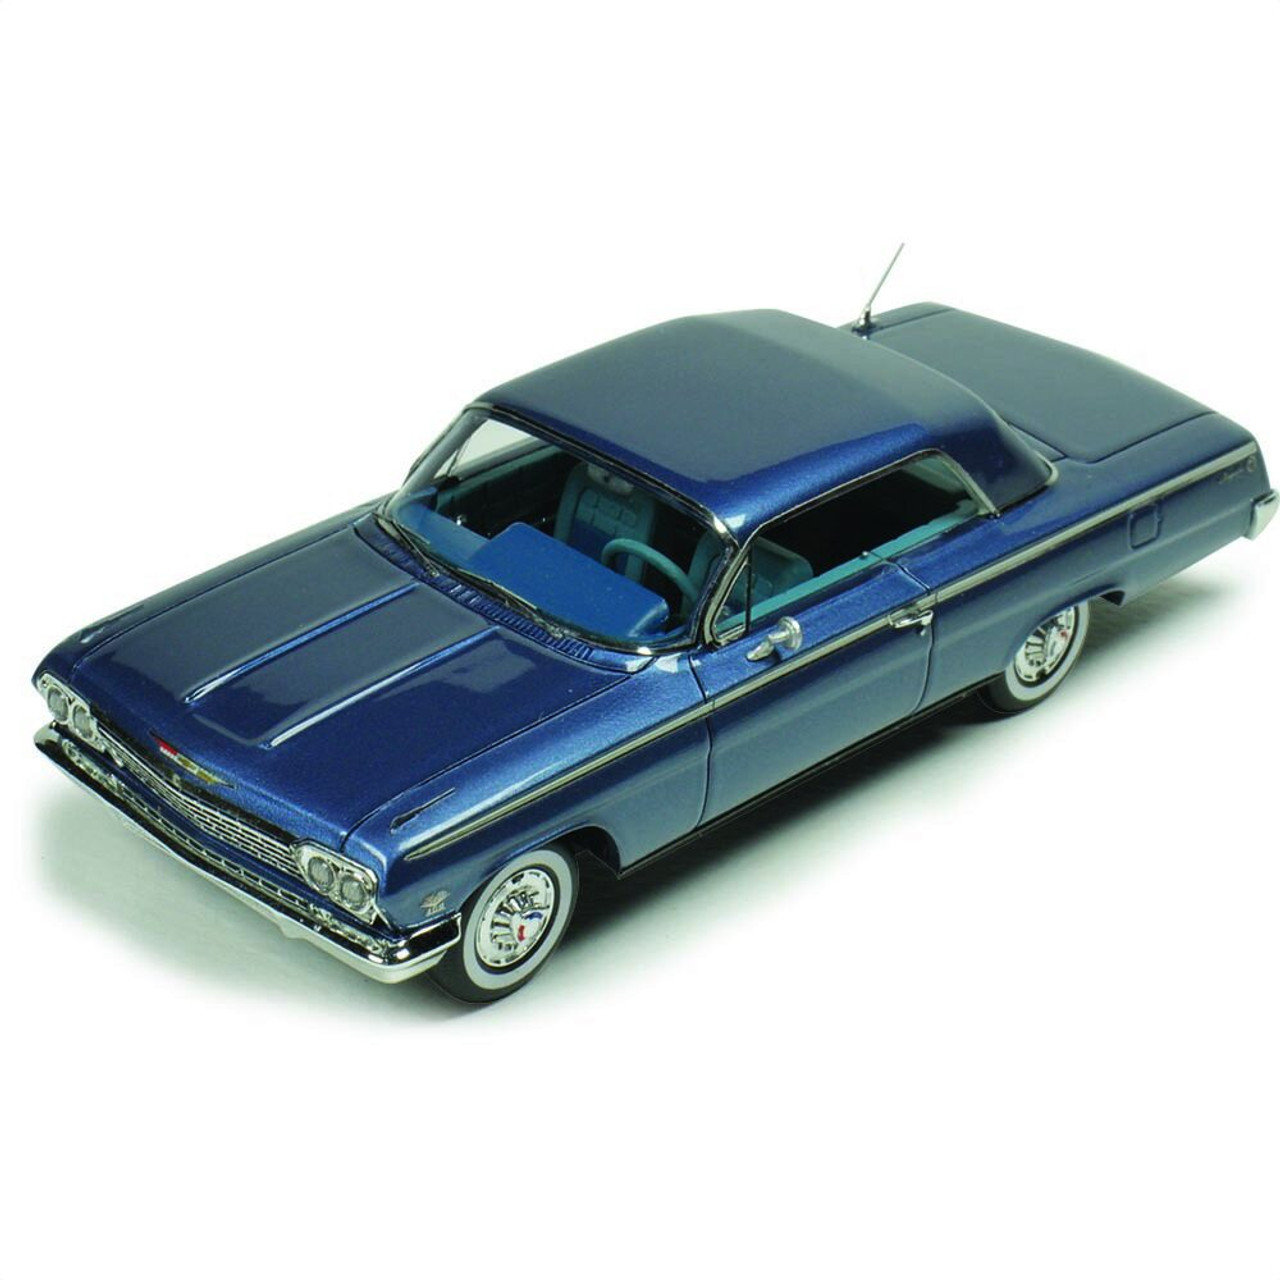 1962 Chevy Impala SS Hardtop - Nassau Blue 1:43 Scale Cast Resin Model Car